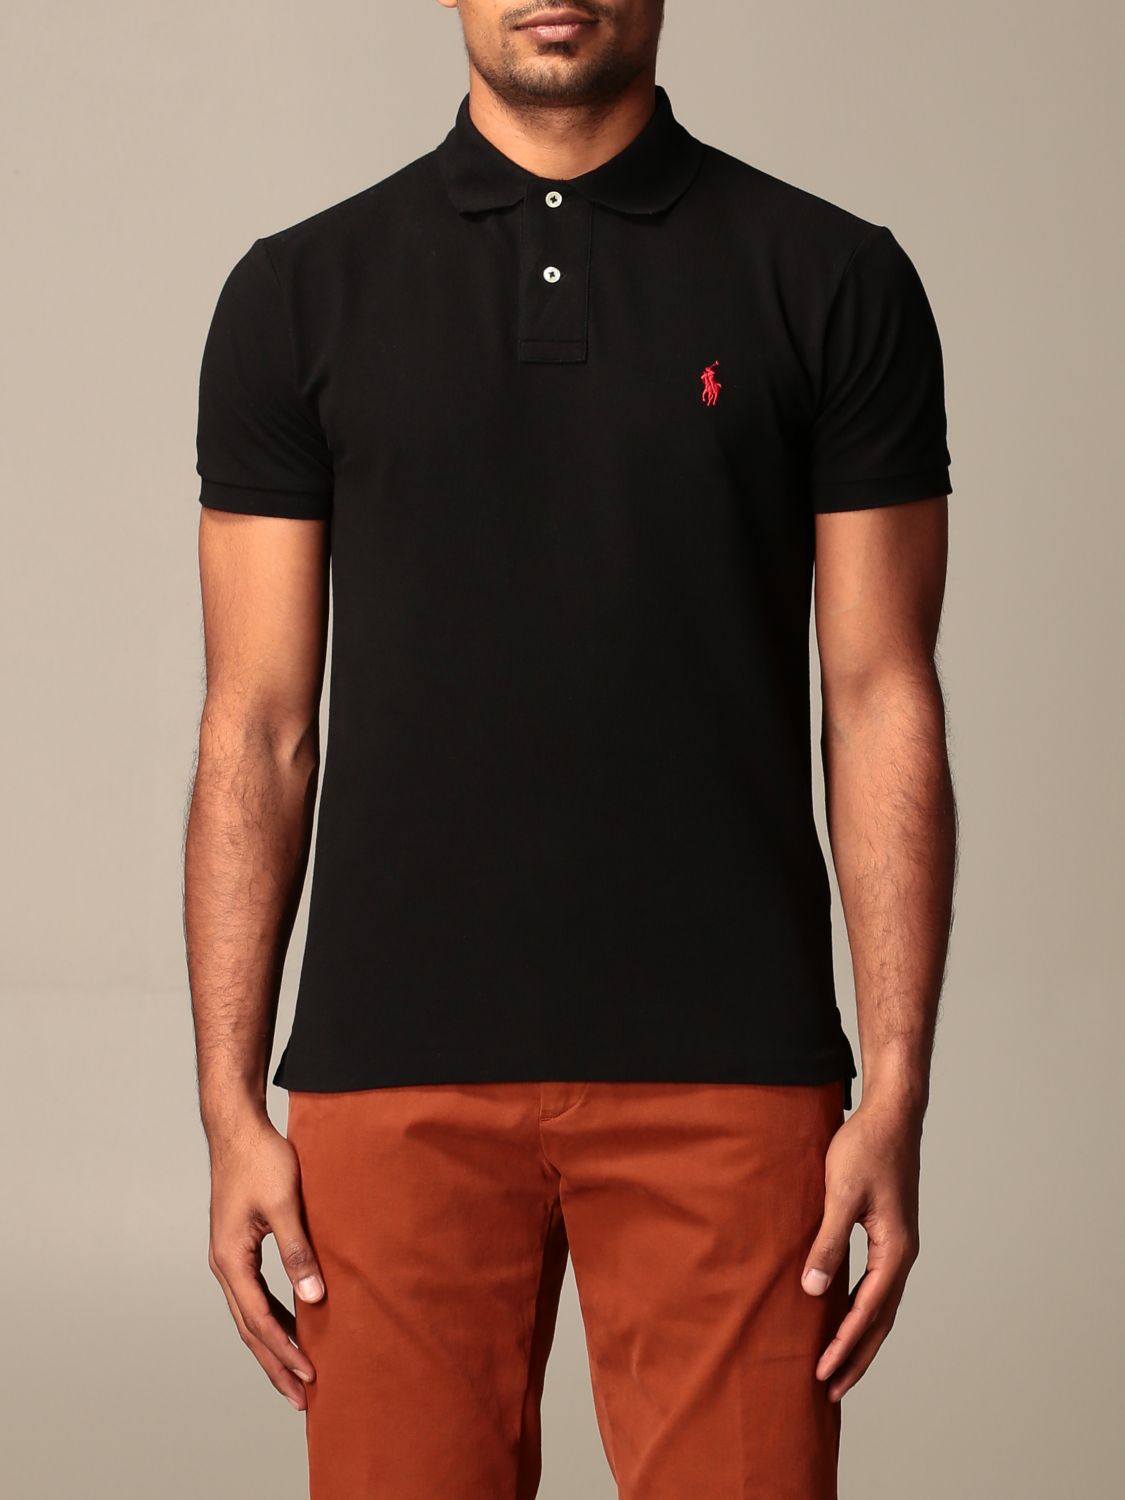 Polo Ralph Lauren Outlet: polo shirt for man - Black  Polo Ralph Lauren  polo shirt 710795080 online at